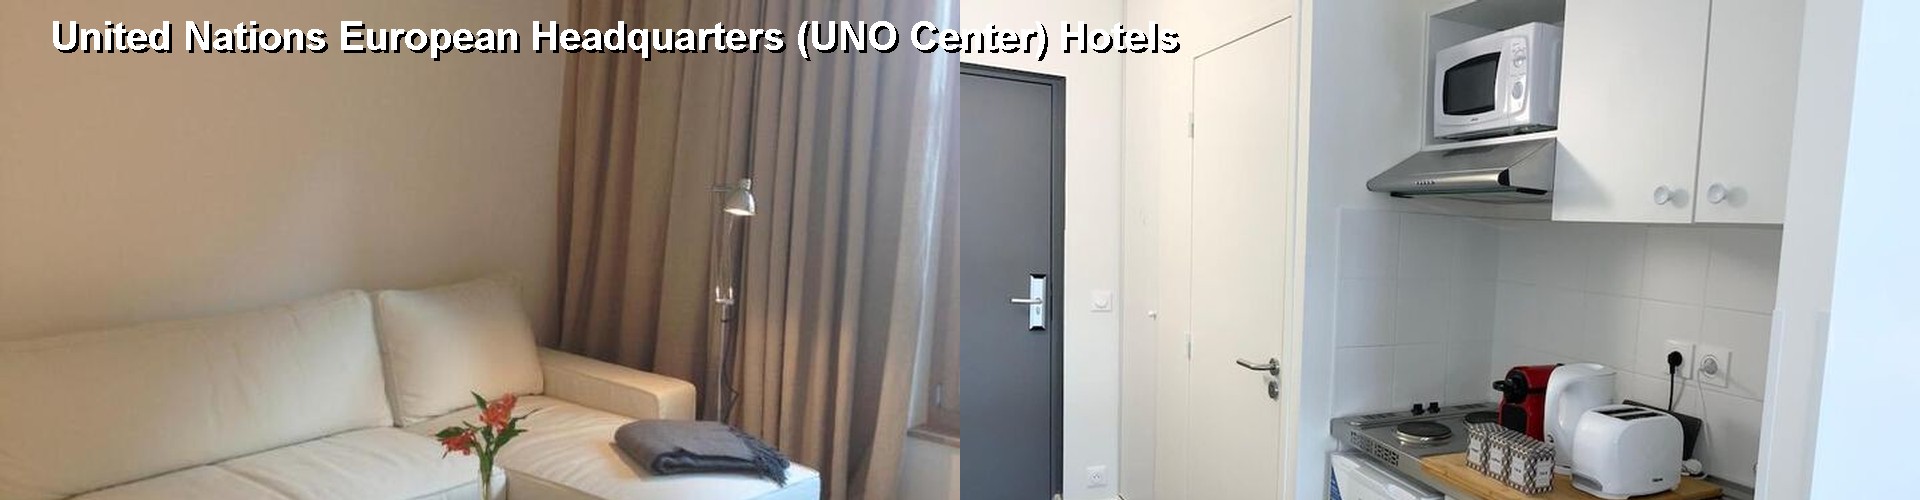 5 Best Hotels near United Nations European Headquarters (UNO Center)